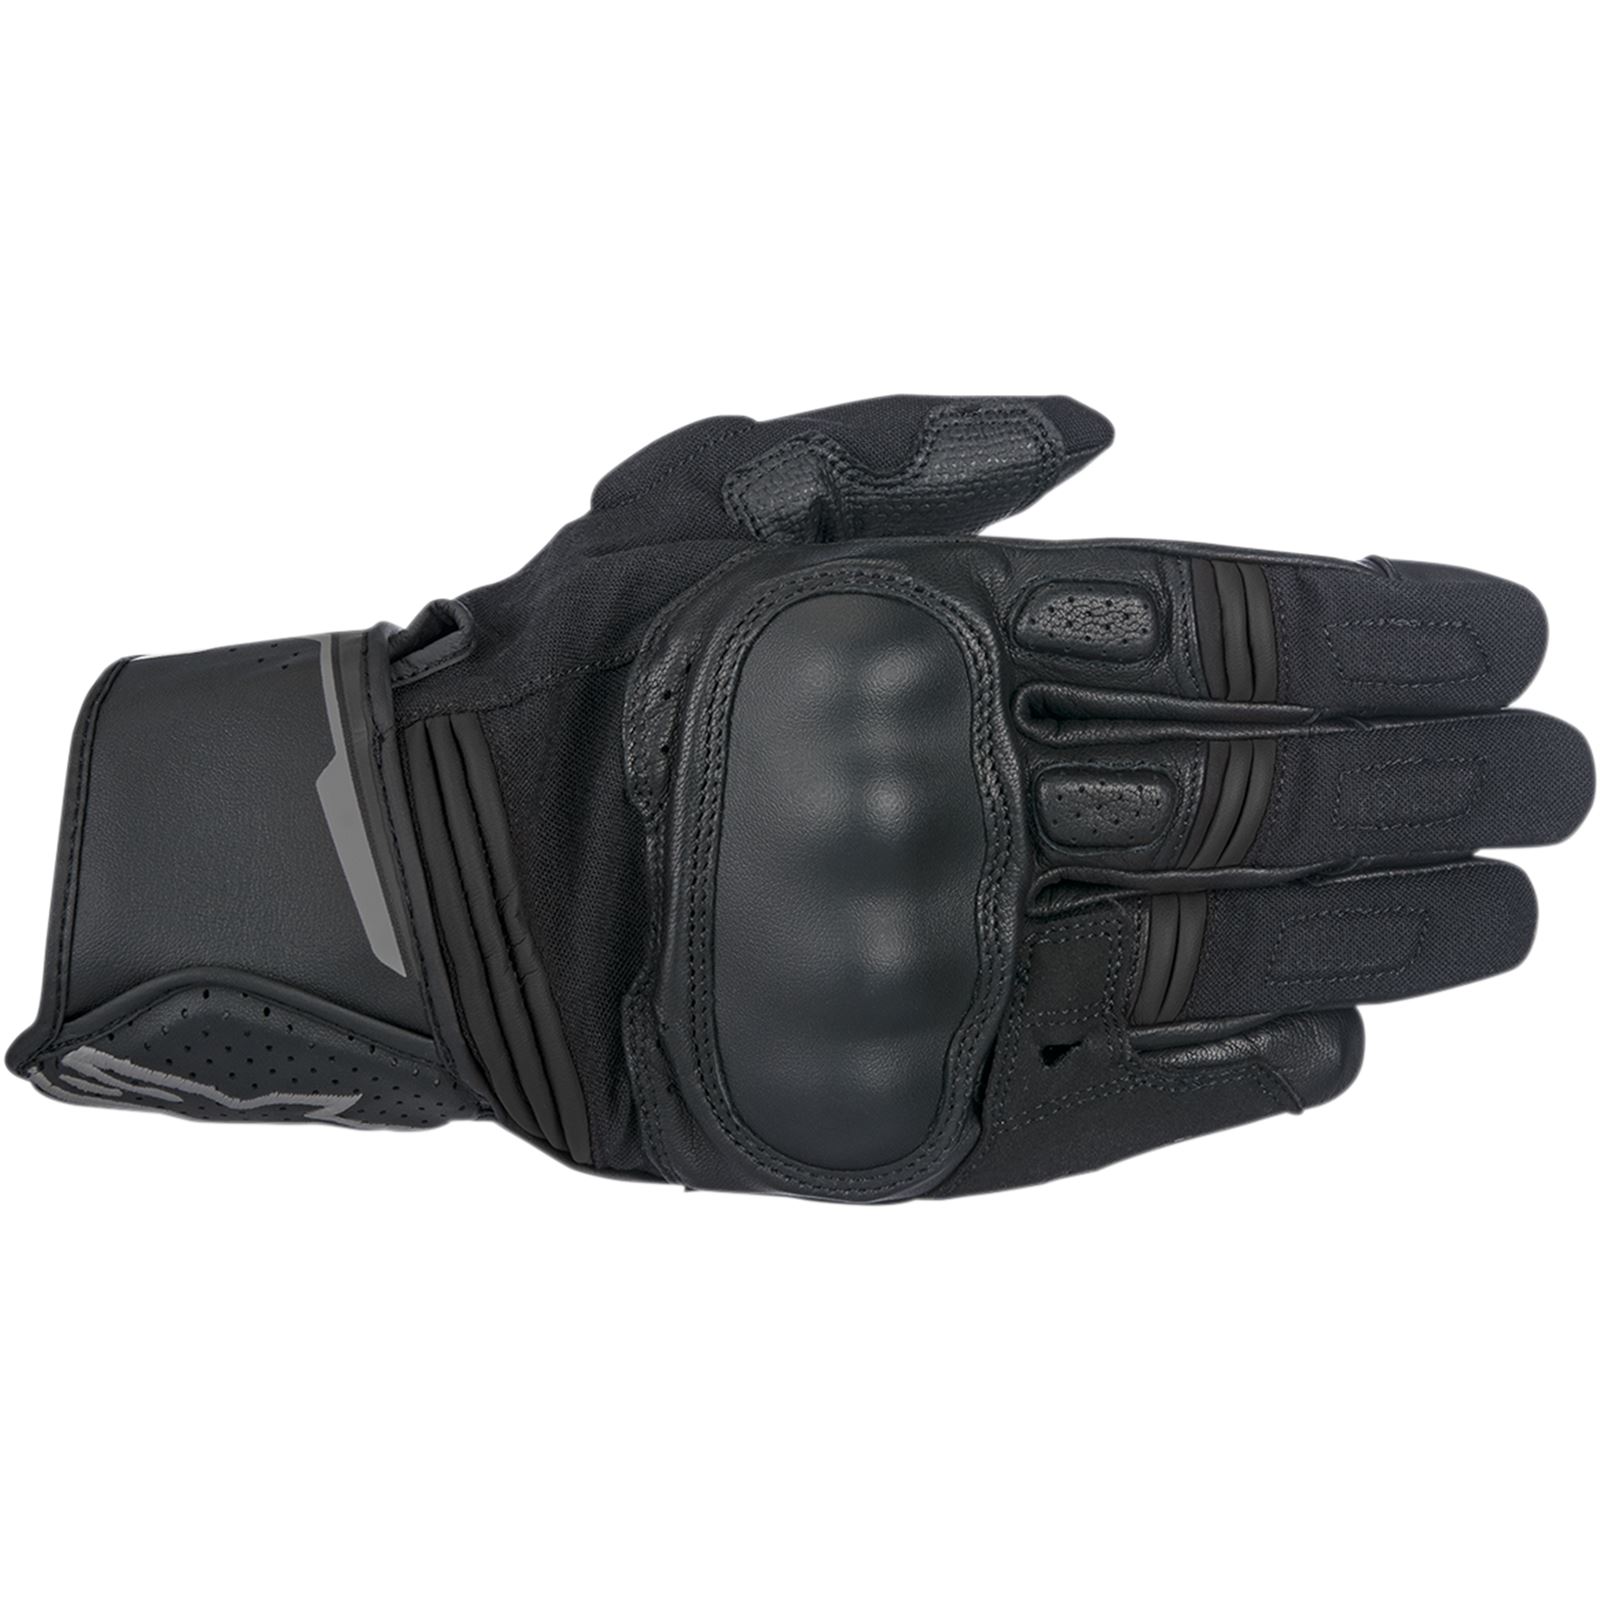 Alpinestars Booster Gloves - Black/Grey - X-Large